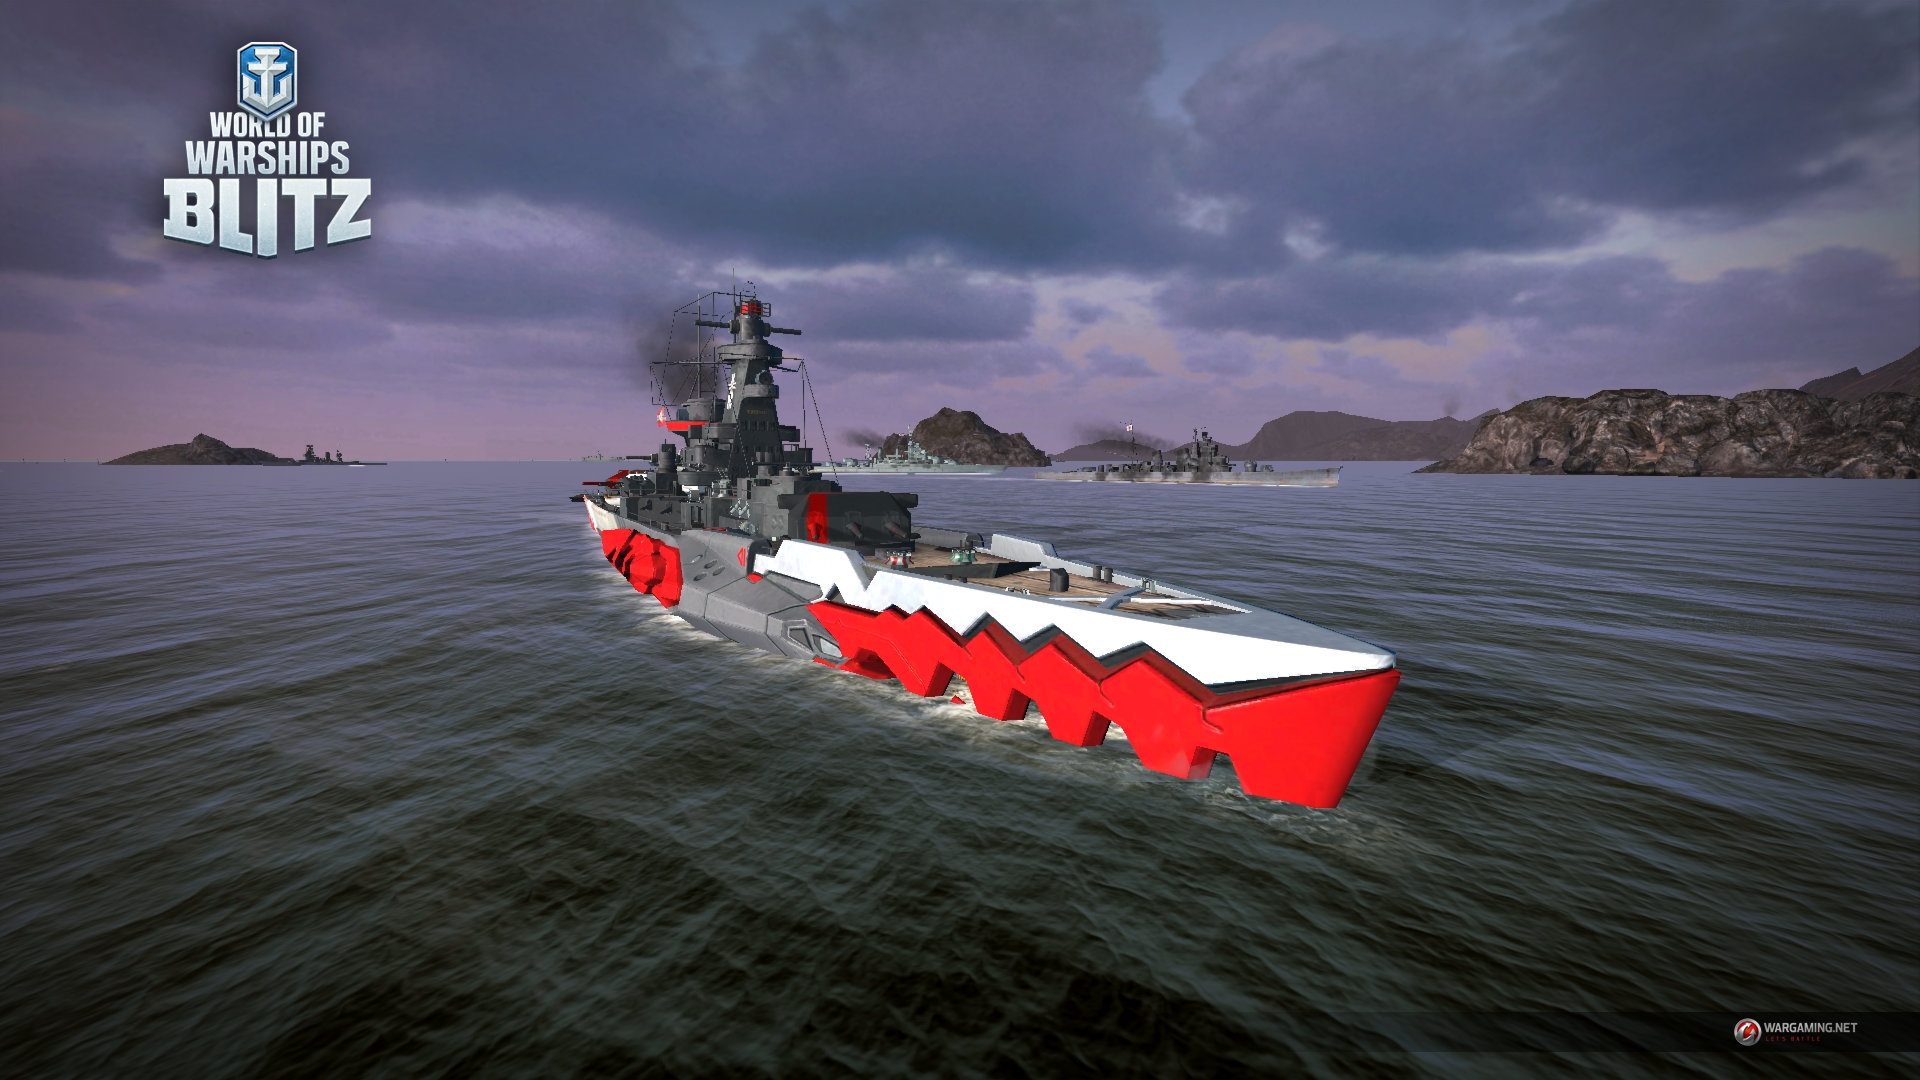 world of warships azur lane collection reddit